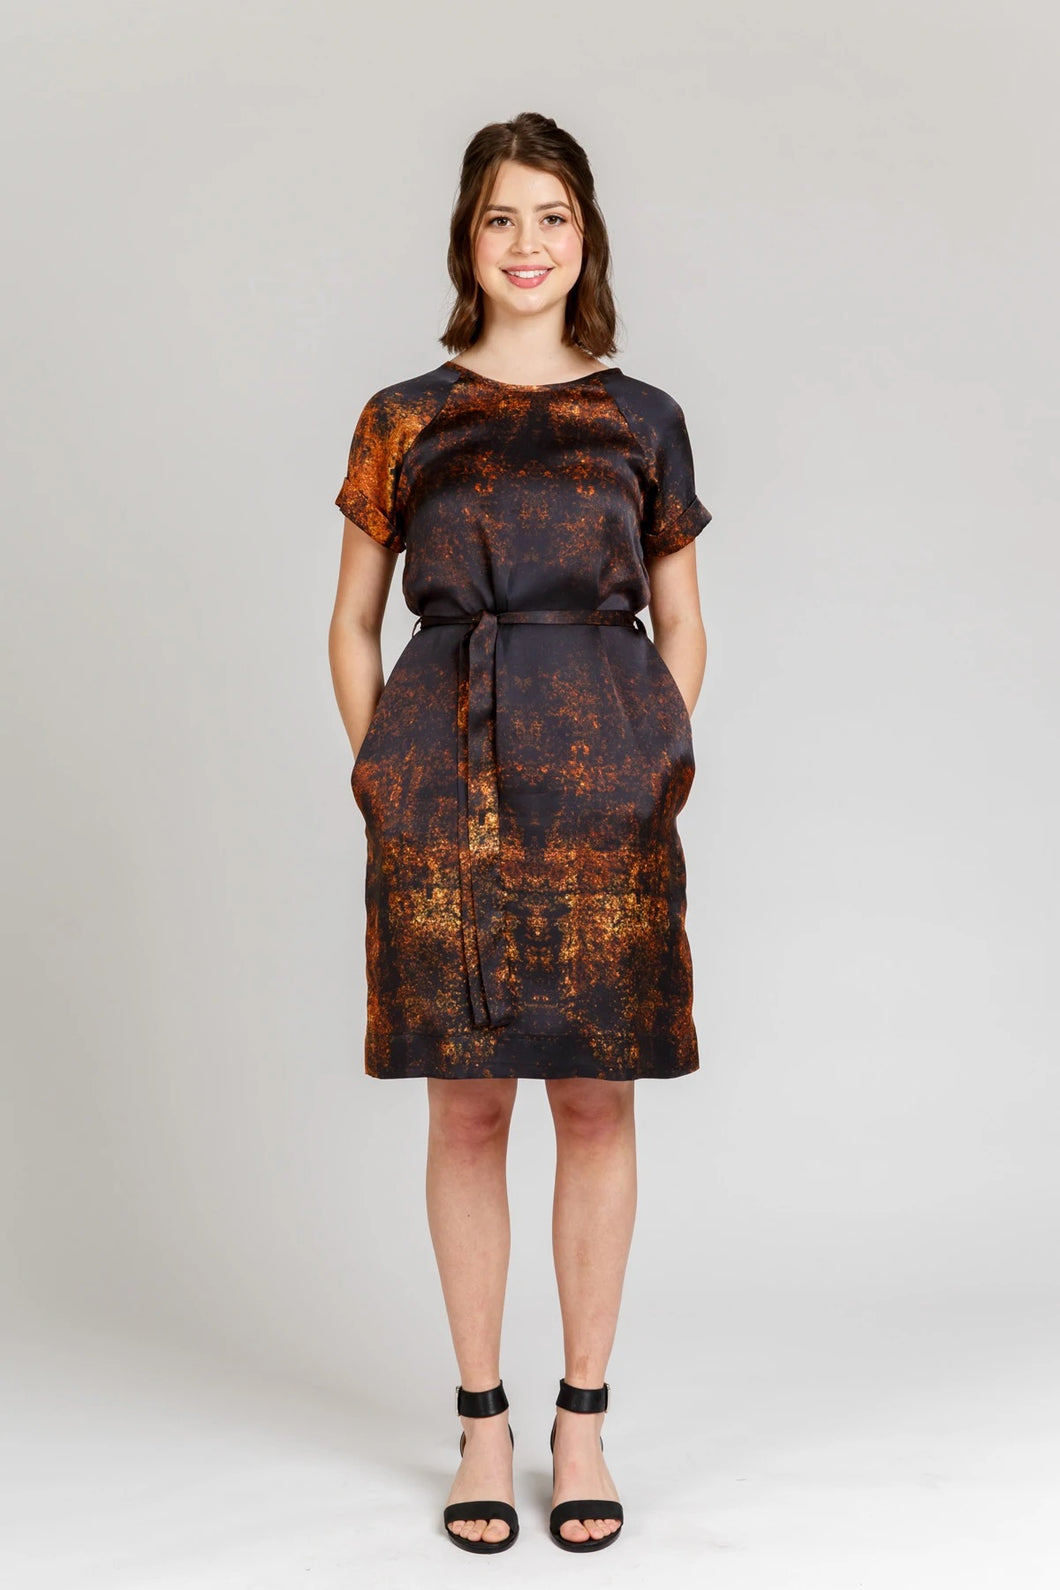 Megan Nielsen - River Dress & Top Sewing Pattern